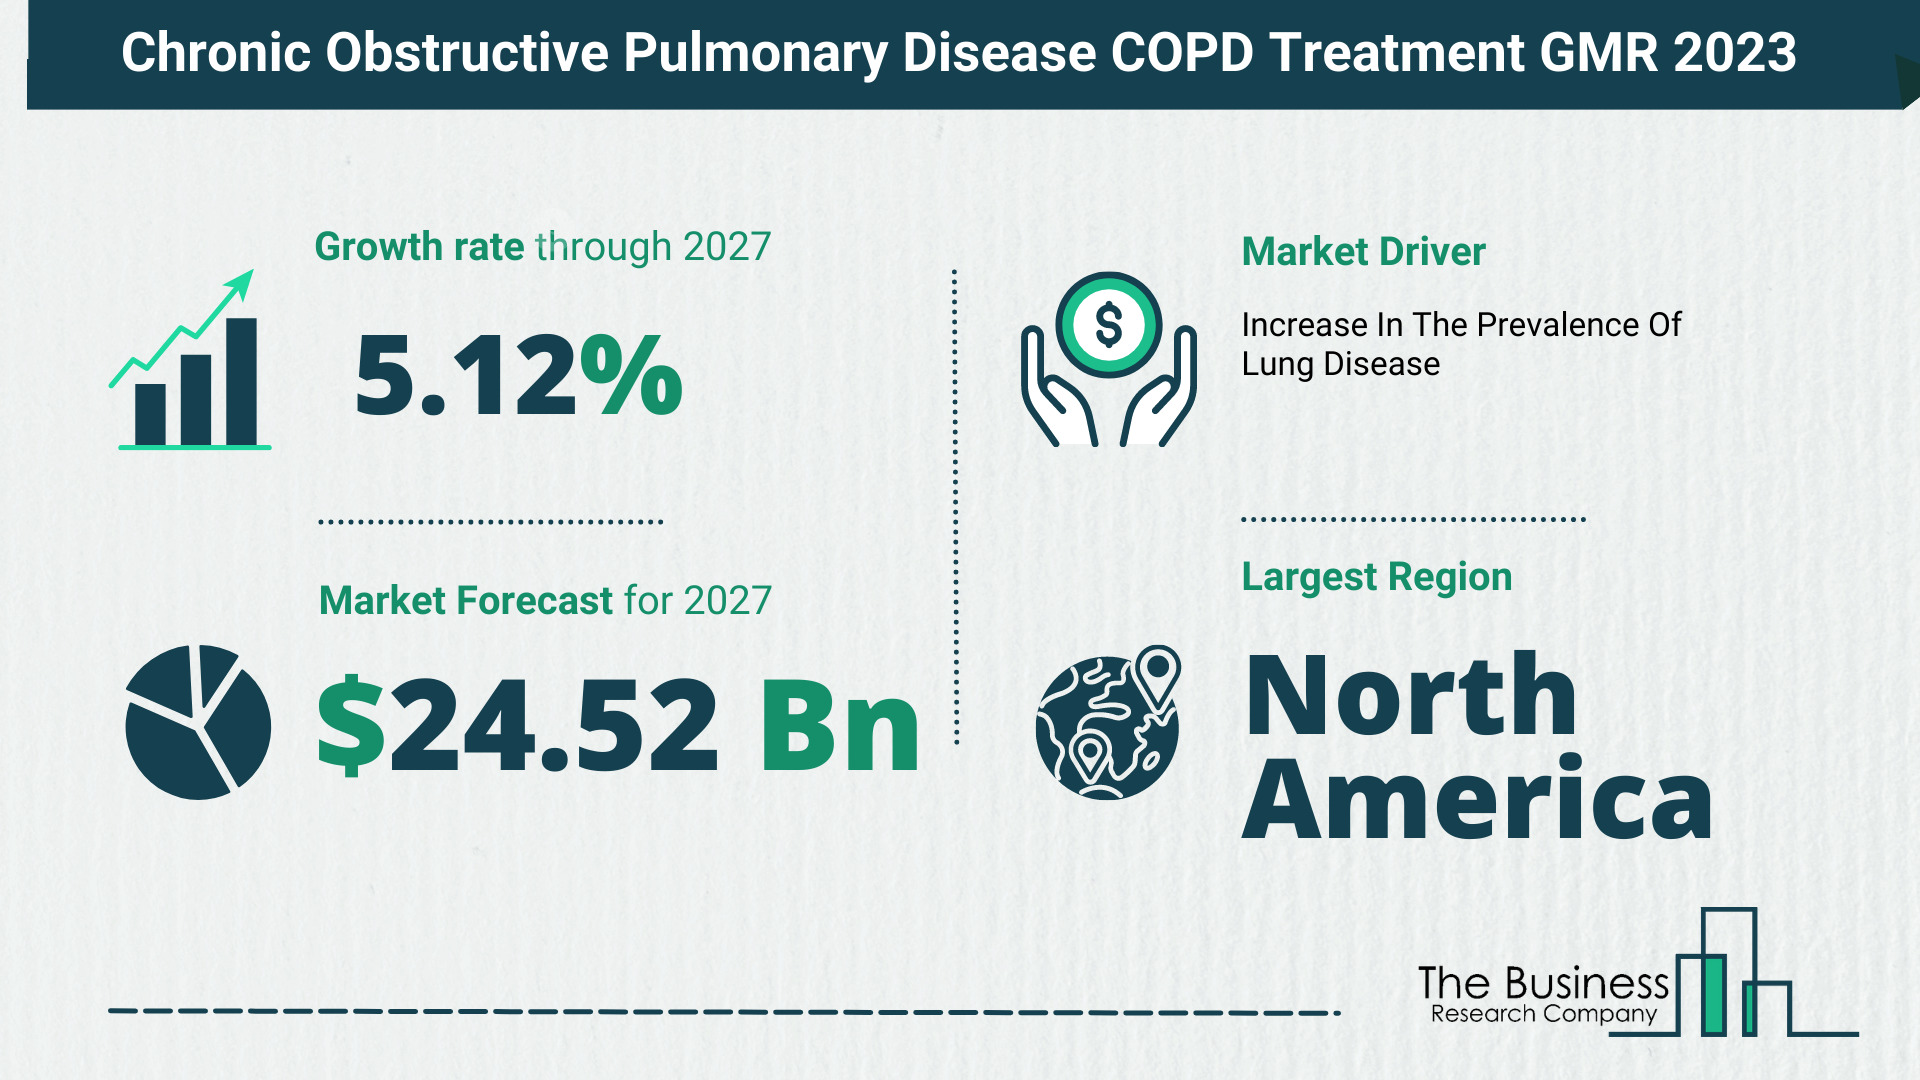 Global Chronic Obstructive Pulmonary Disease COPD Treatment Market